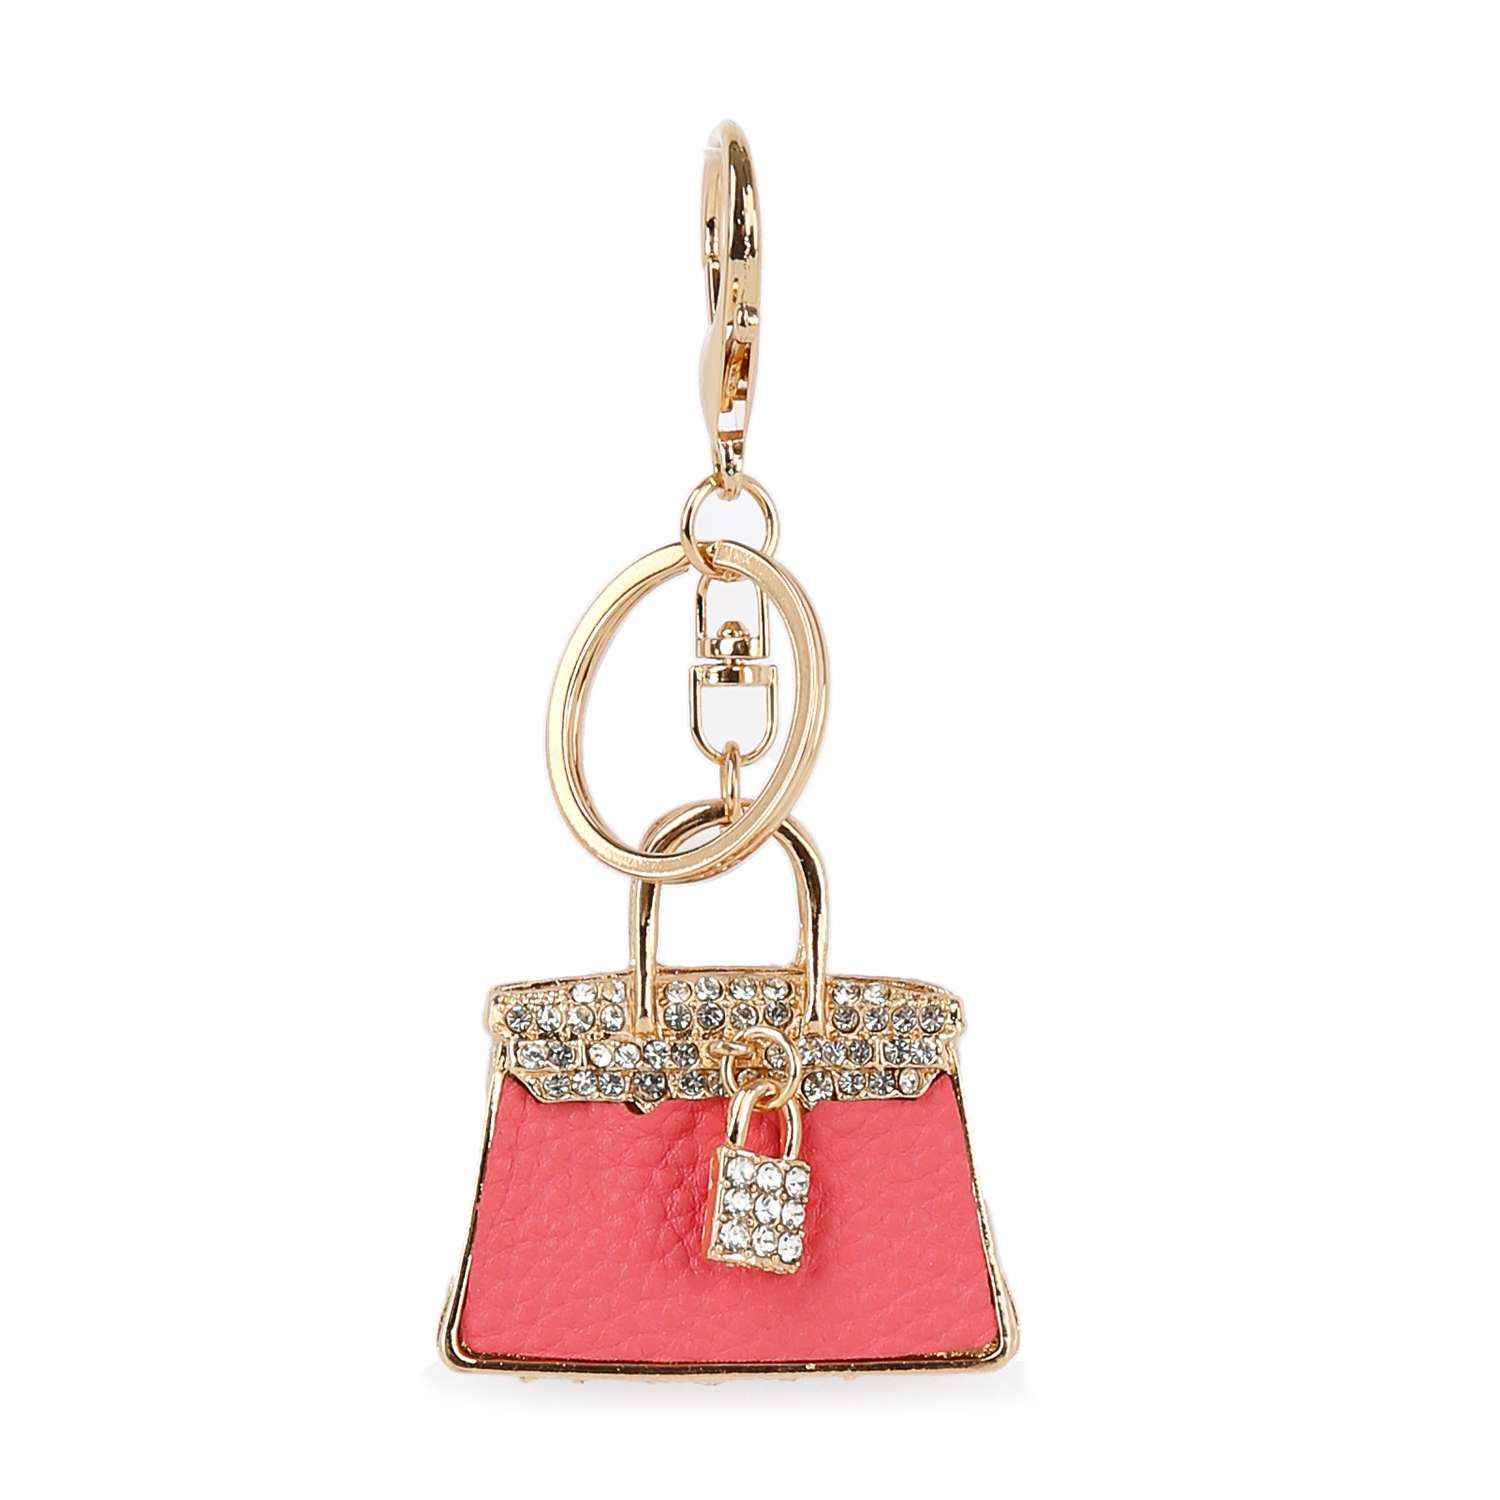 Coral Handbag Purse Charm for adding bling to your hand bag.